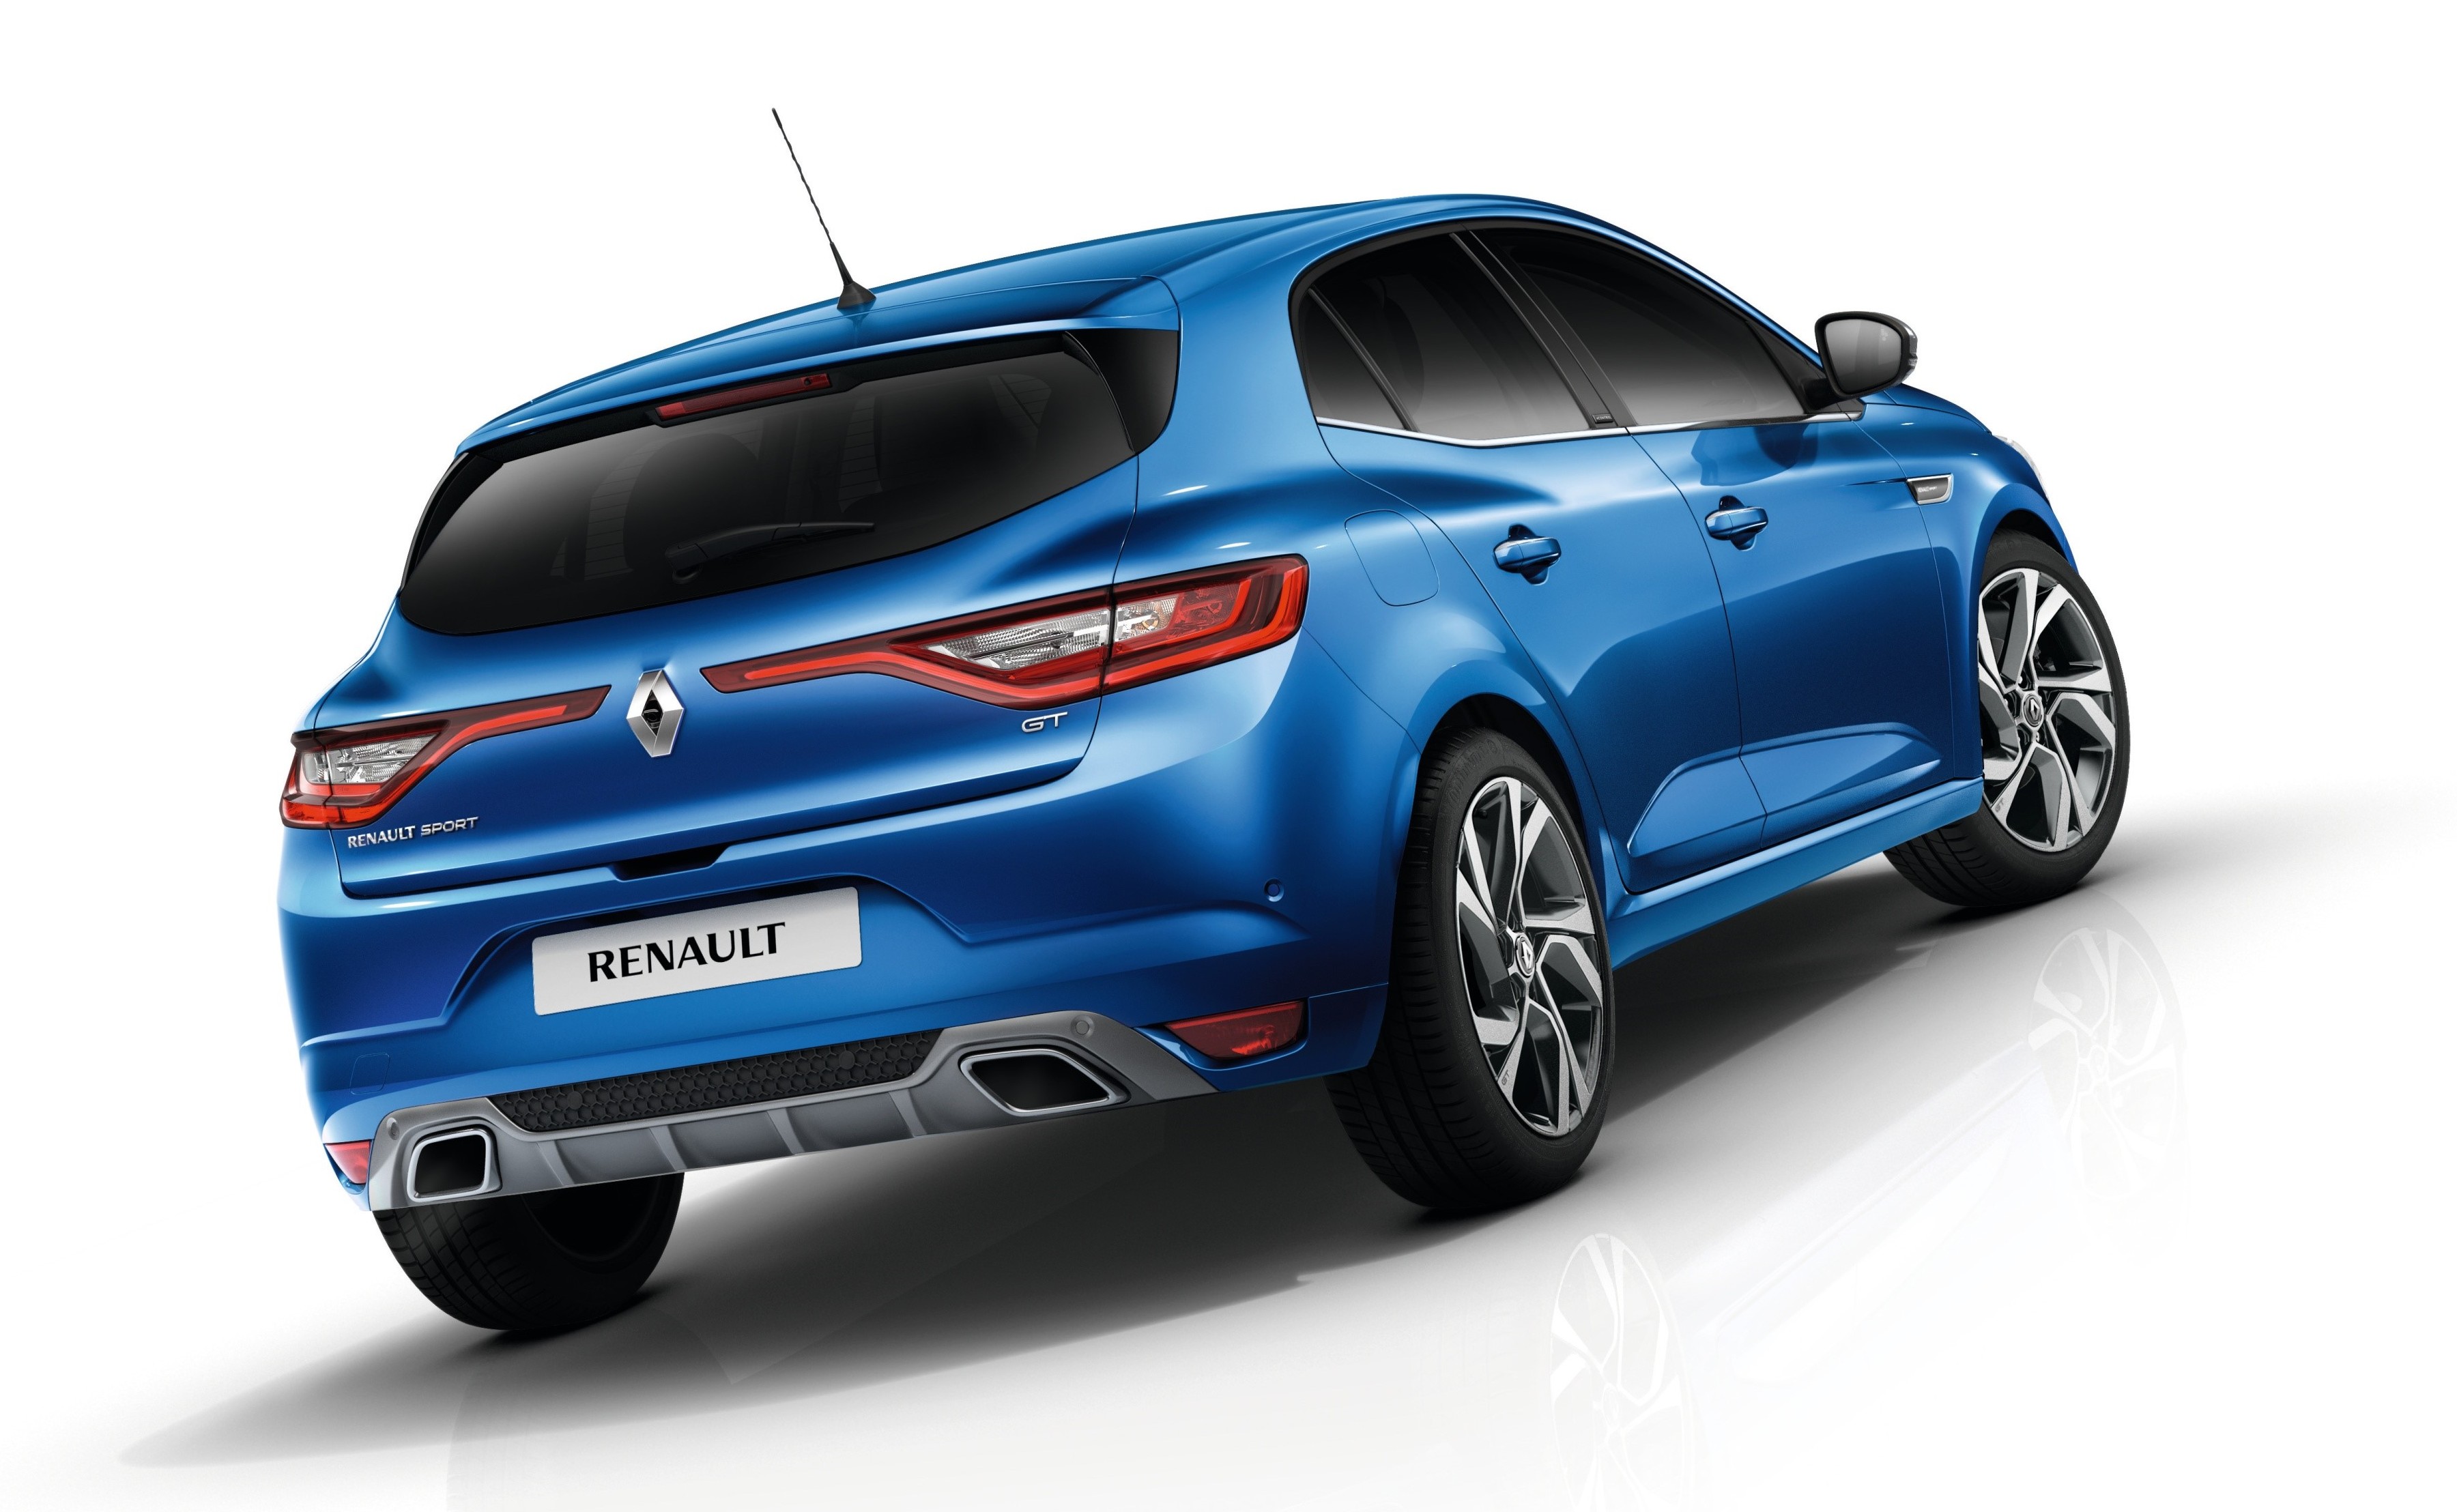 Renault Megane GT interior specifications